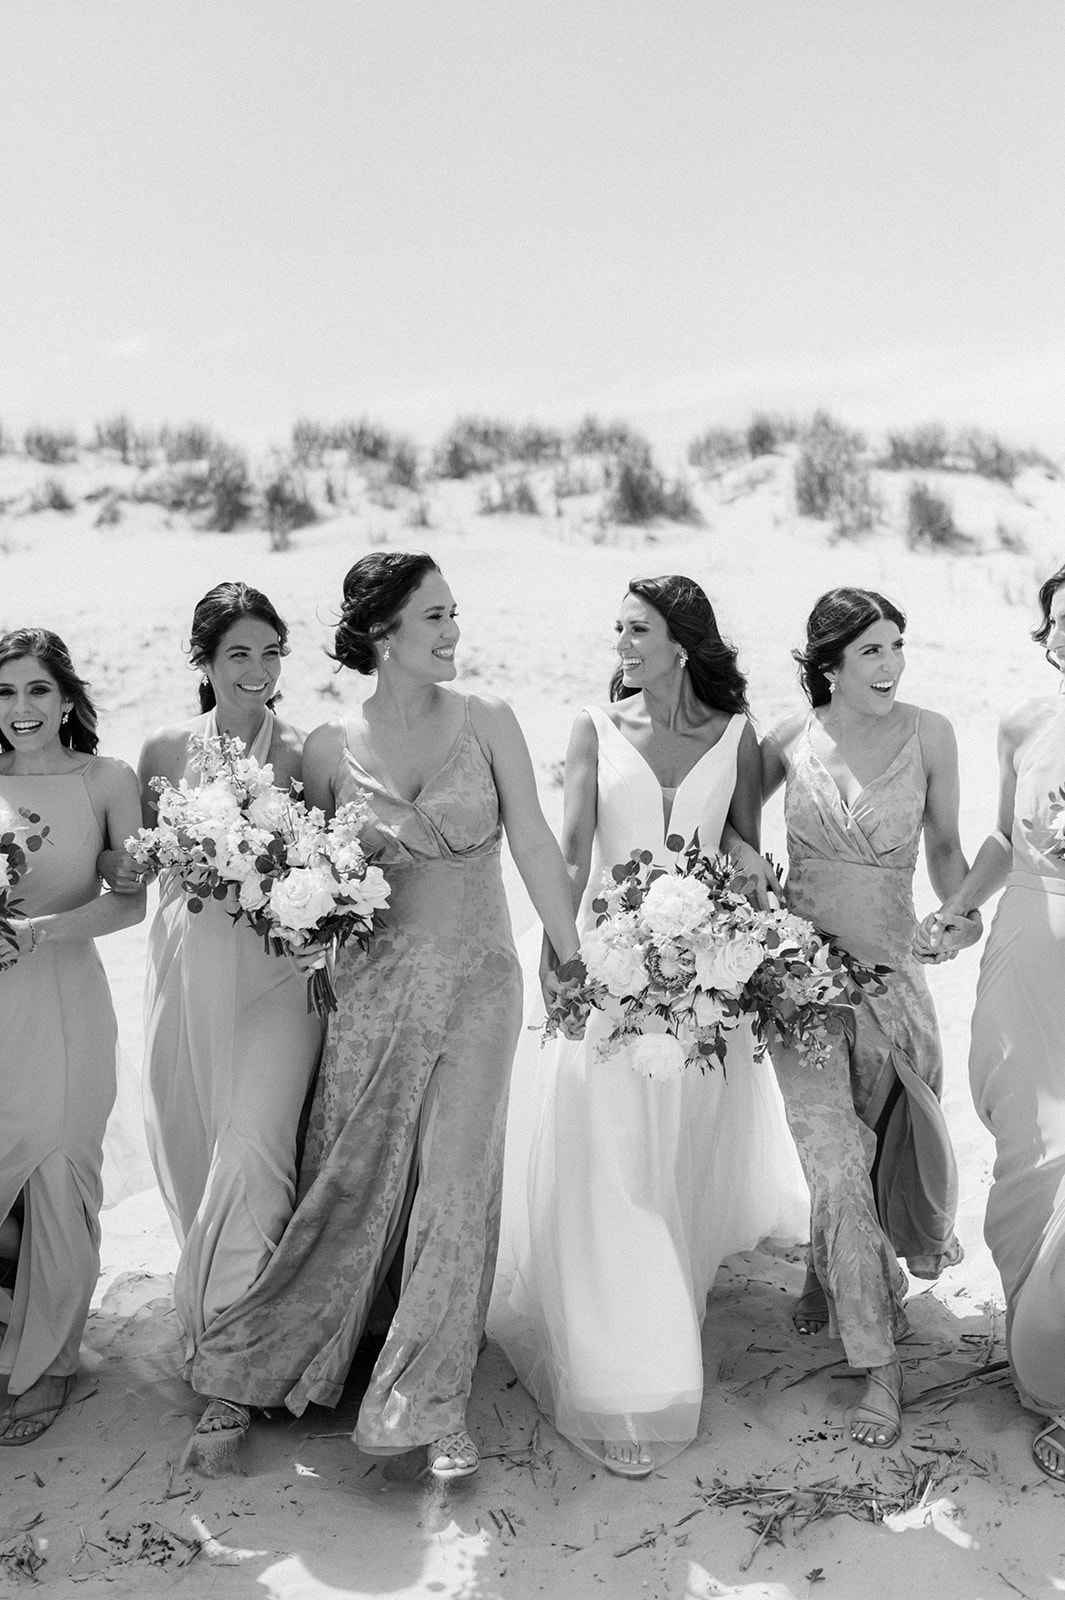 Bridal party beach portraits at Icona Avalon Wedding